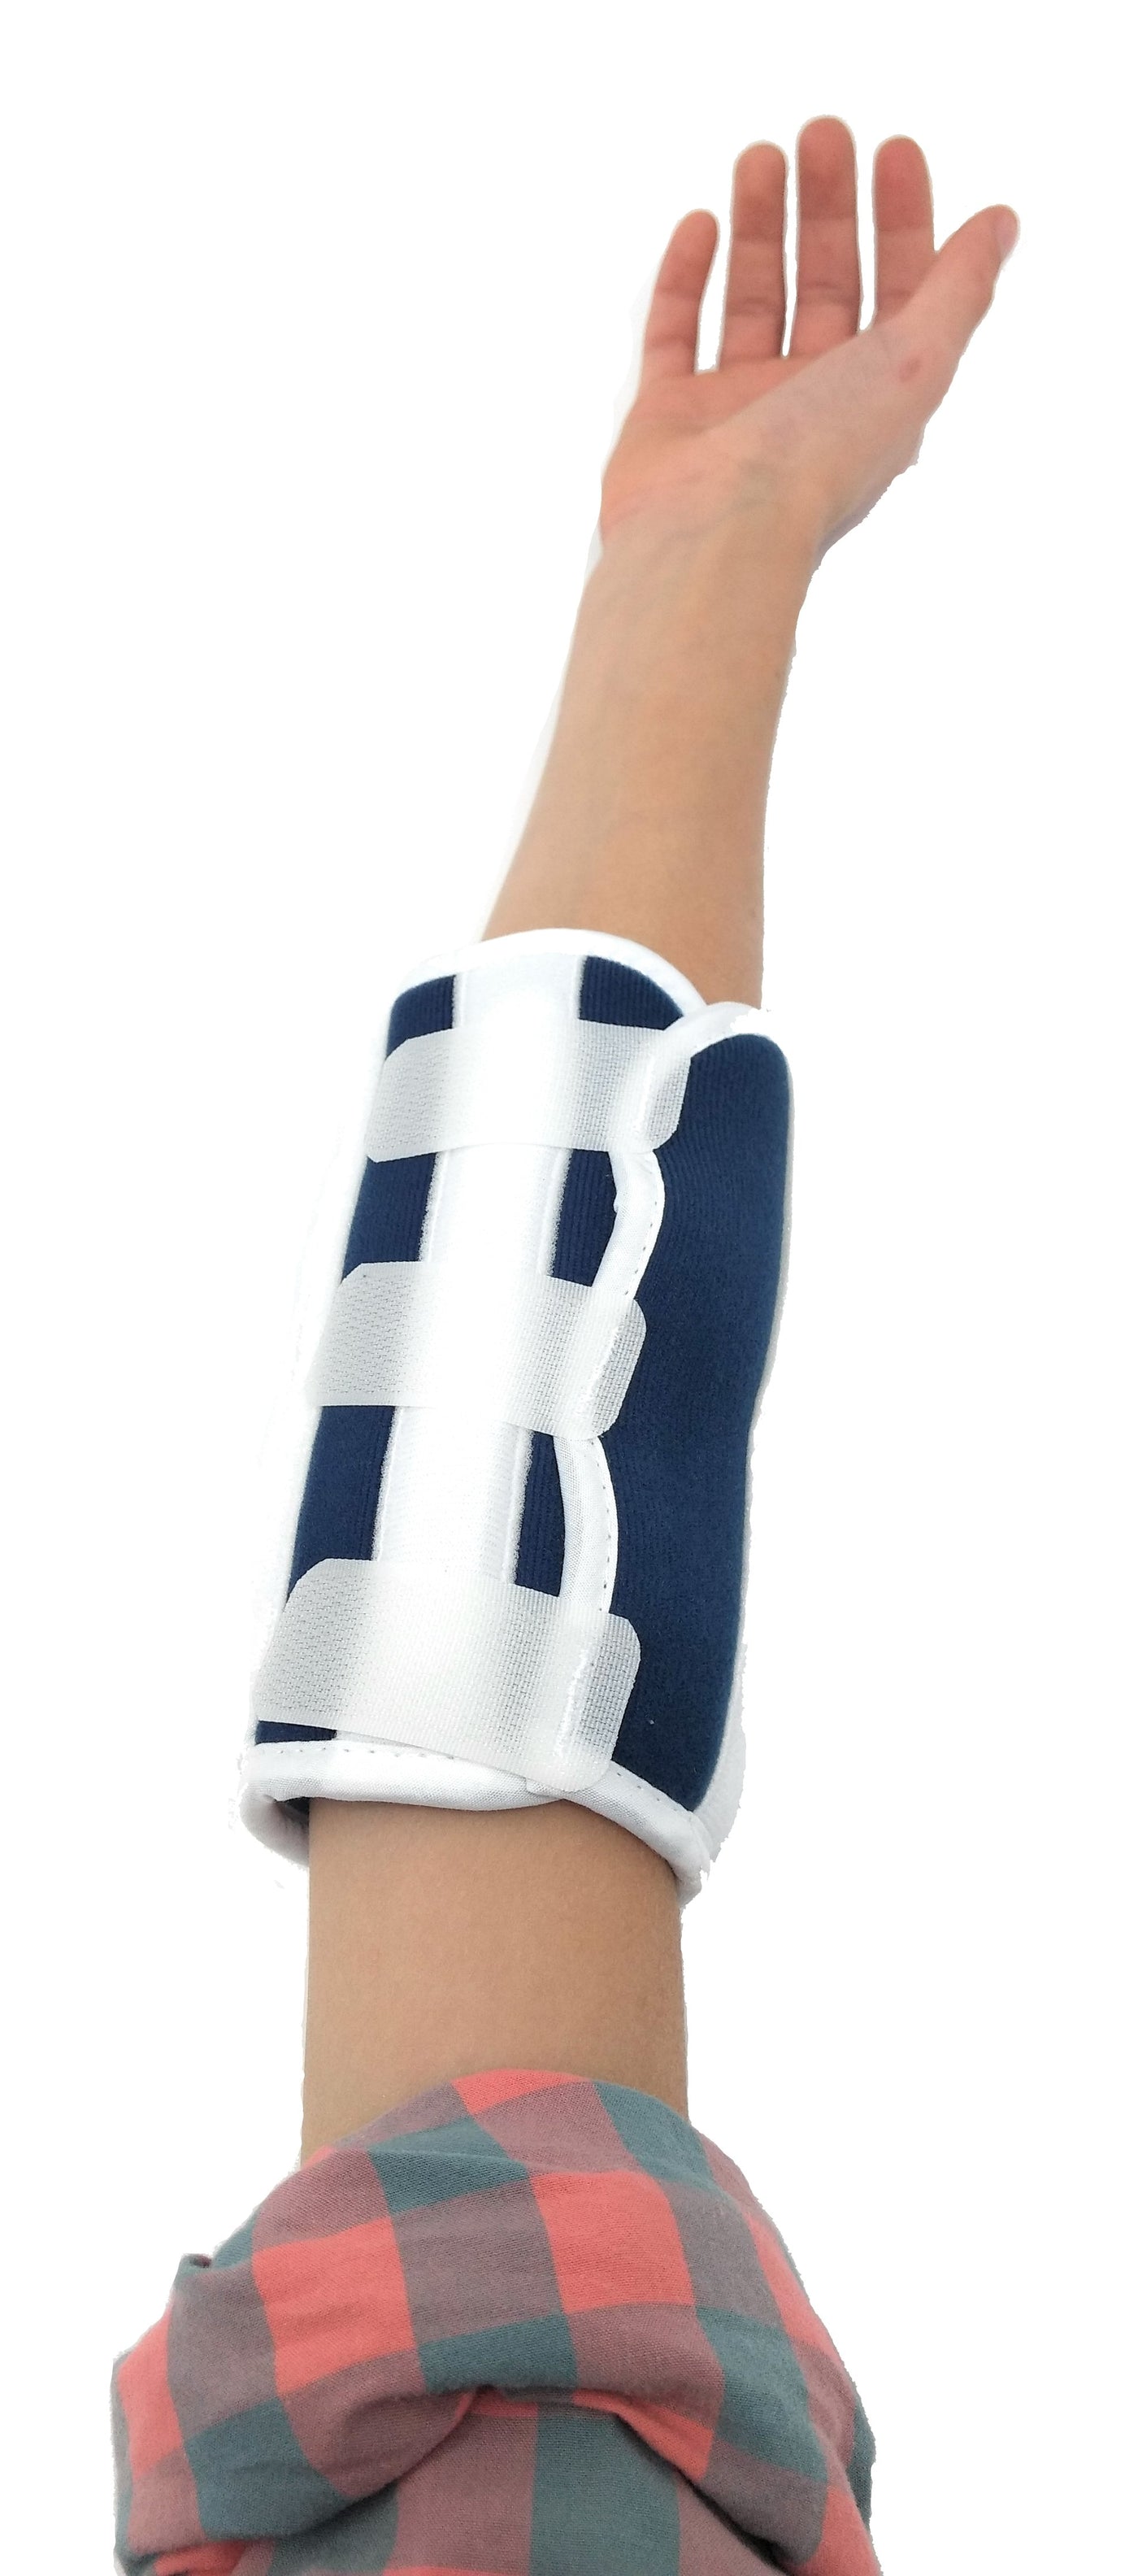 Premium Pediatric Child Elbow Immobilizer Stabilizer Splint/Arm